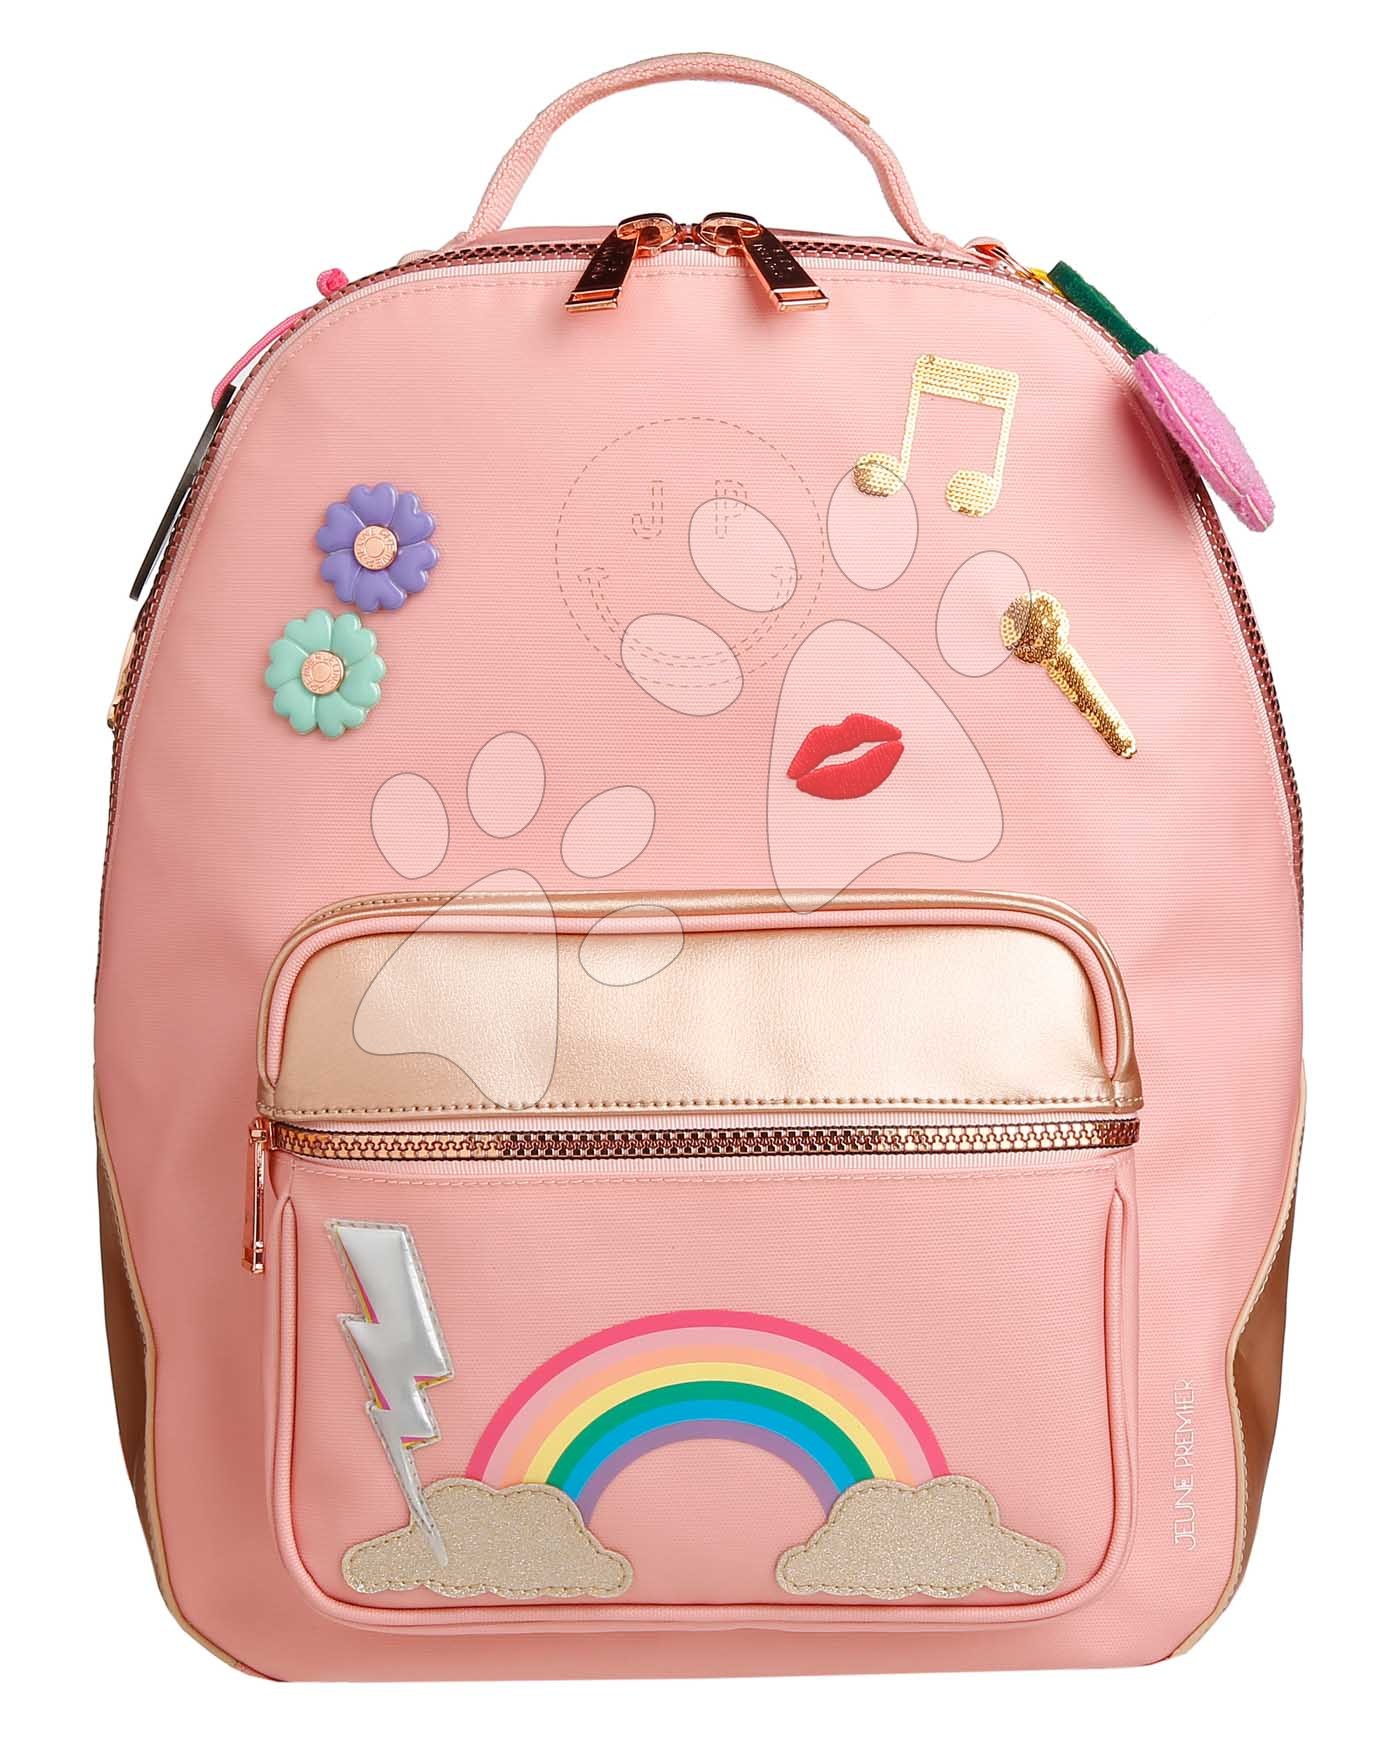 Školská taška batoh New Bobbie Lady Gadget Pink Jeune Premier ergonomická luxusné prevedenie 42*30 cm